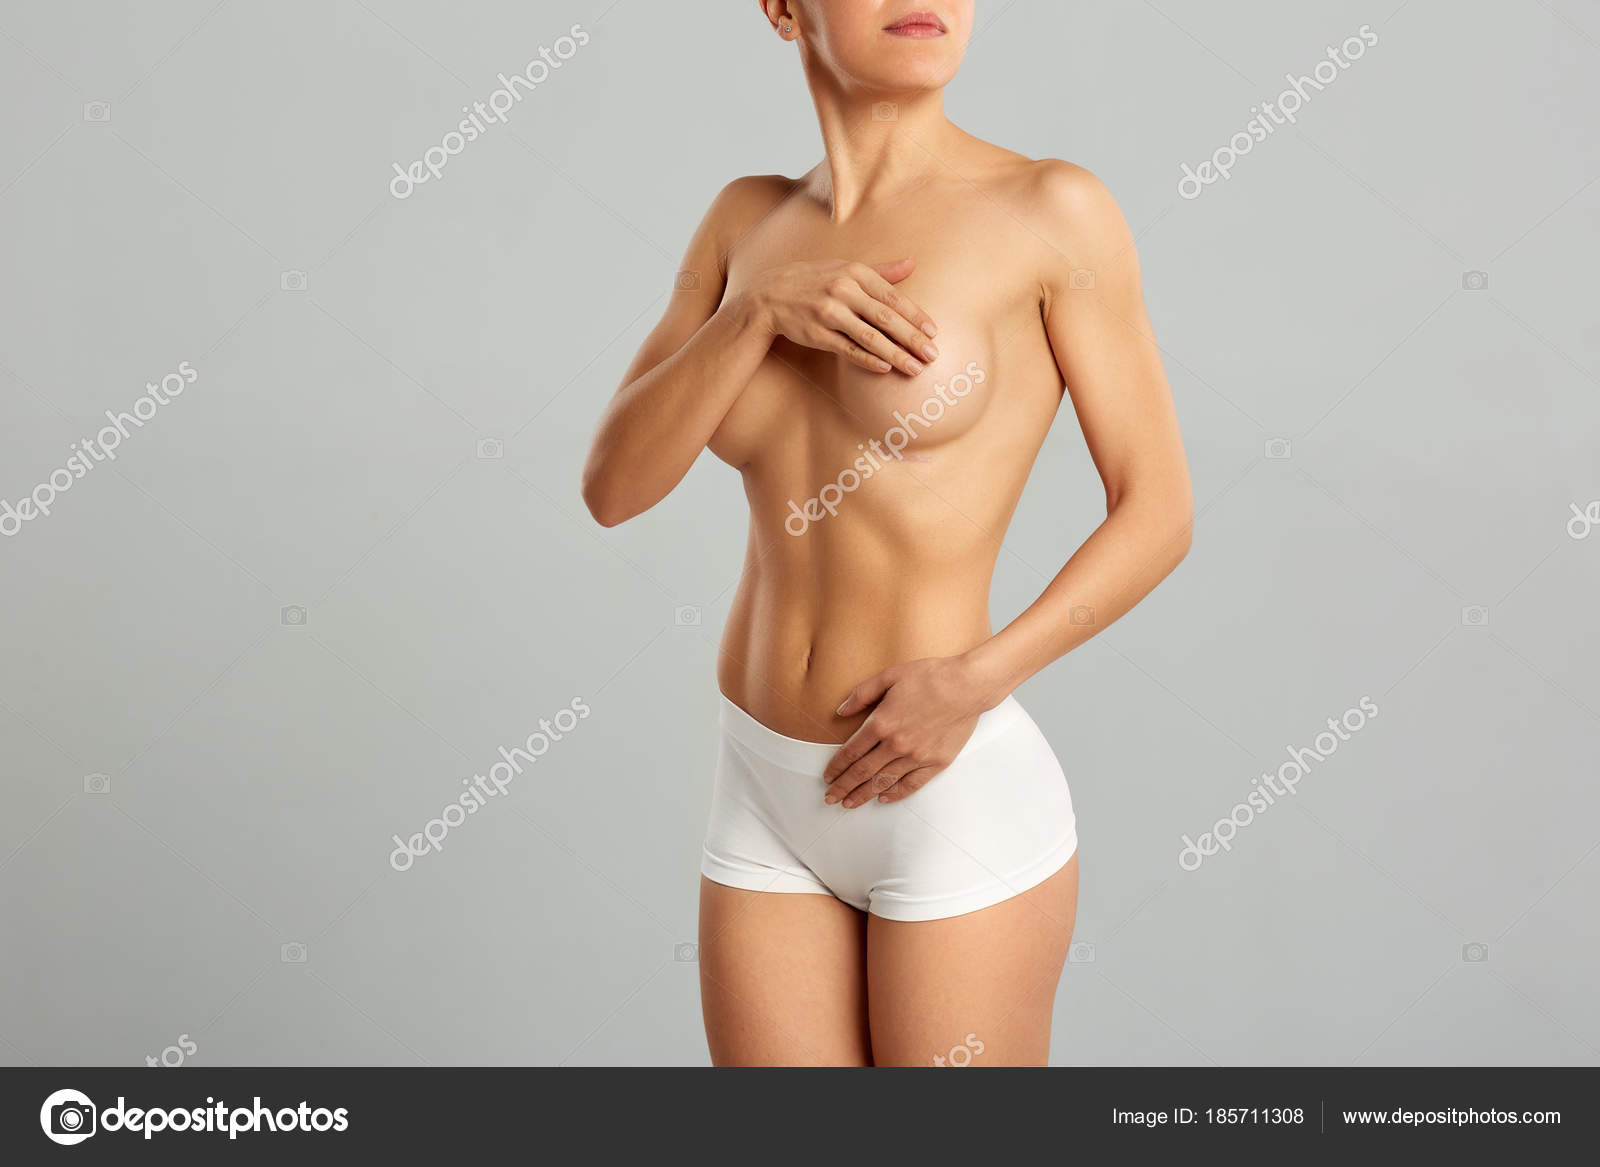 Breast Desnudo Photography